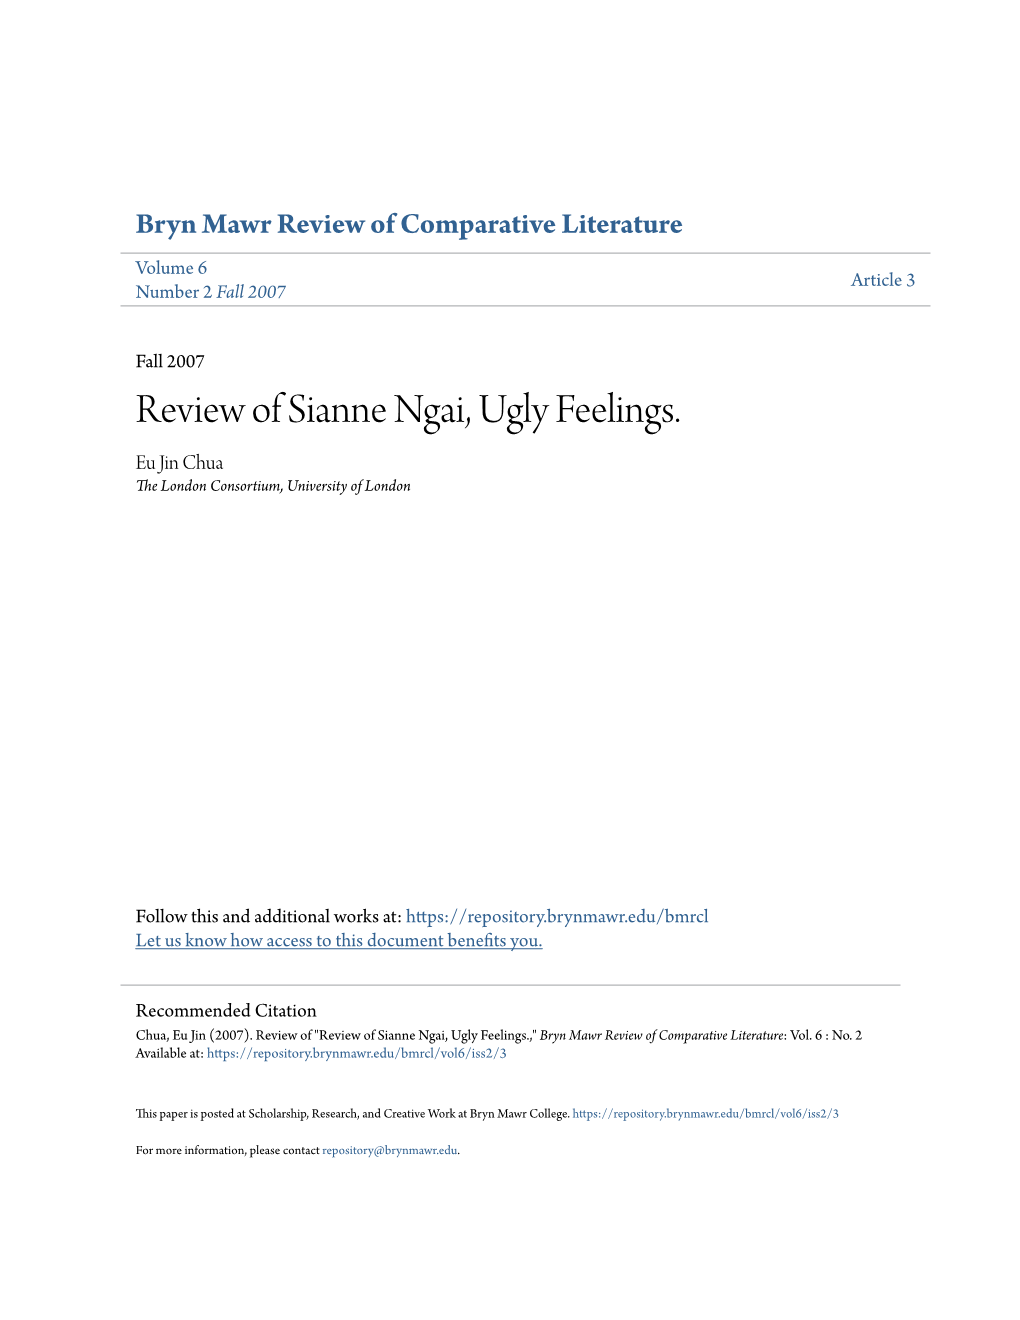 Review of Sianne Ngai, Ugly Feelings. Eu Jin Chua the London Consortium, University of London